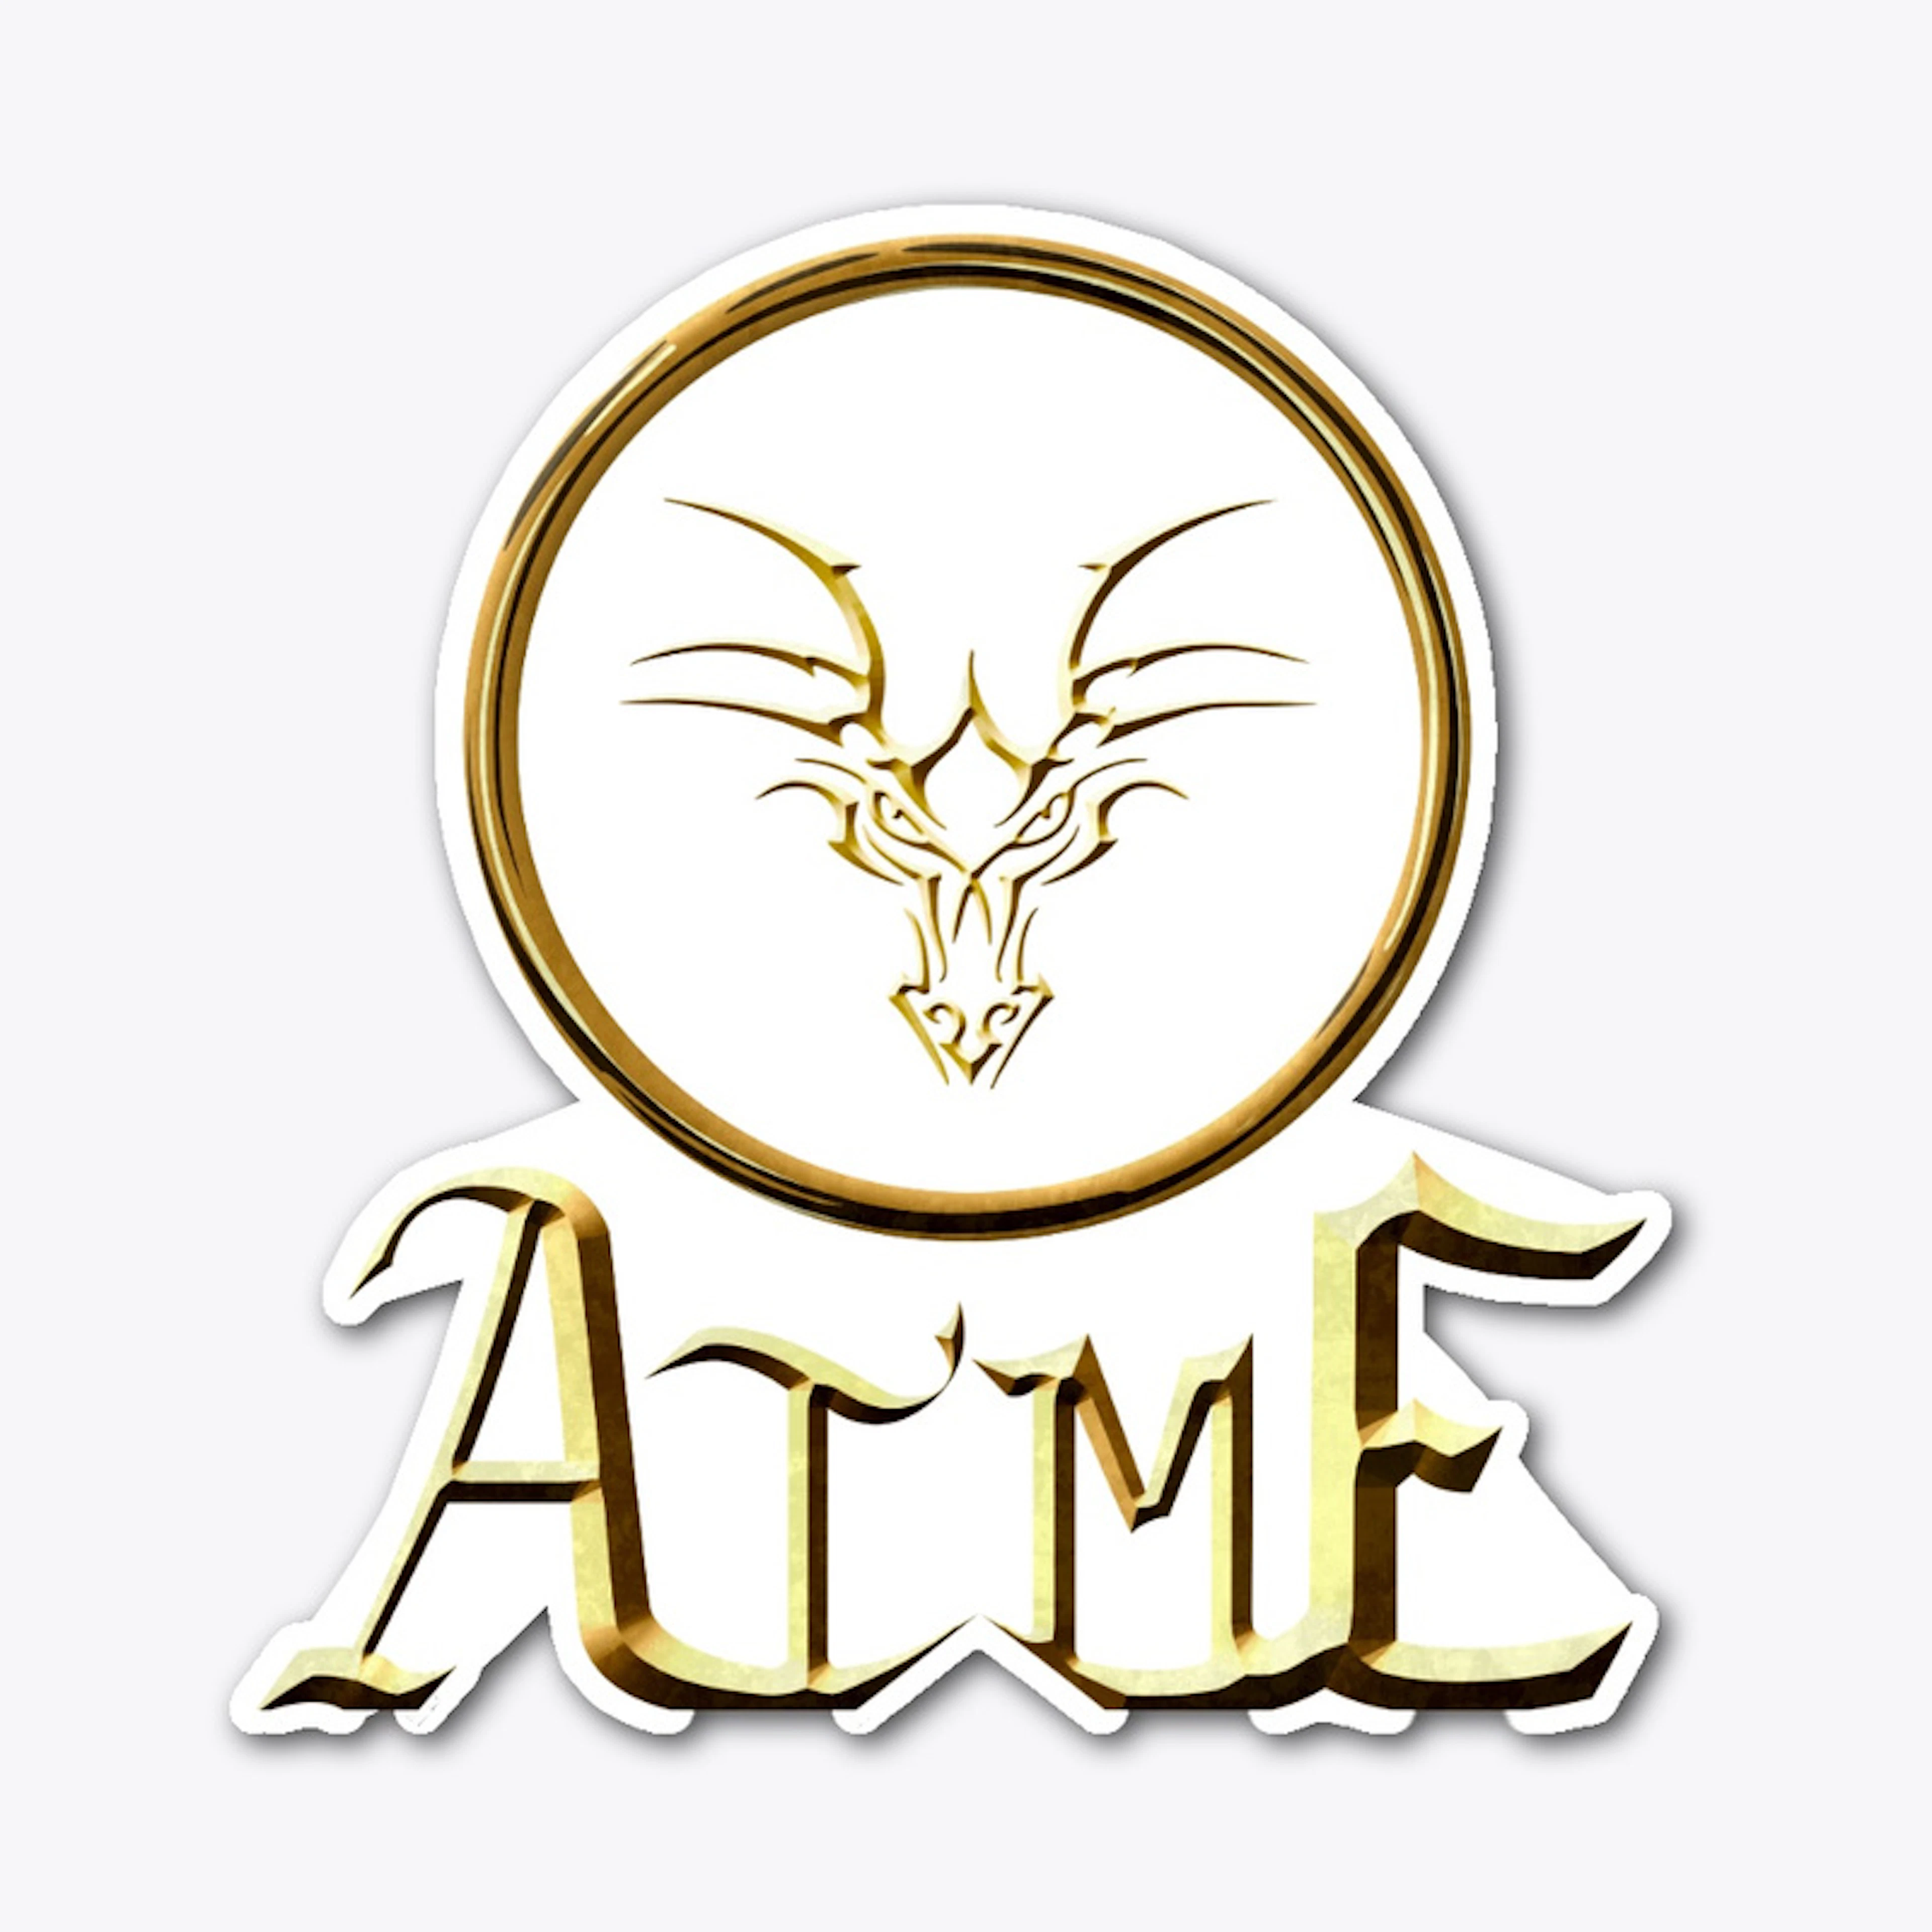 ATME Logo Merch